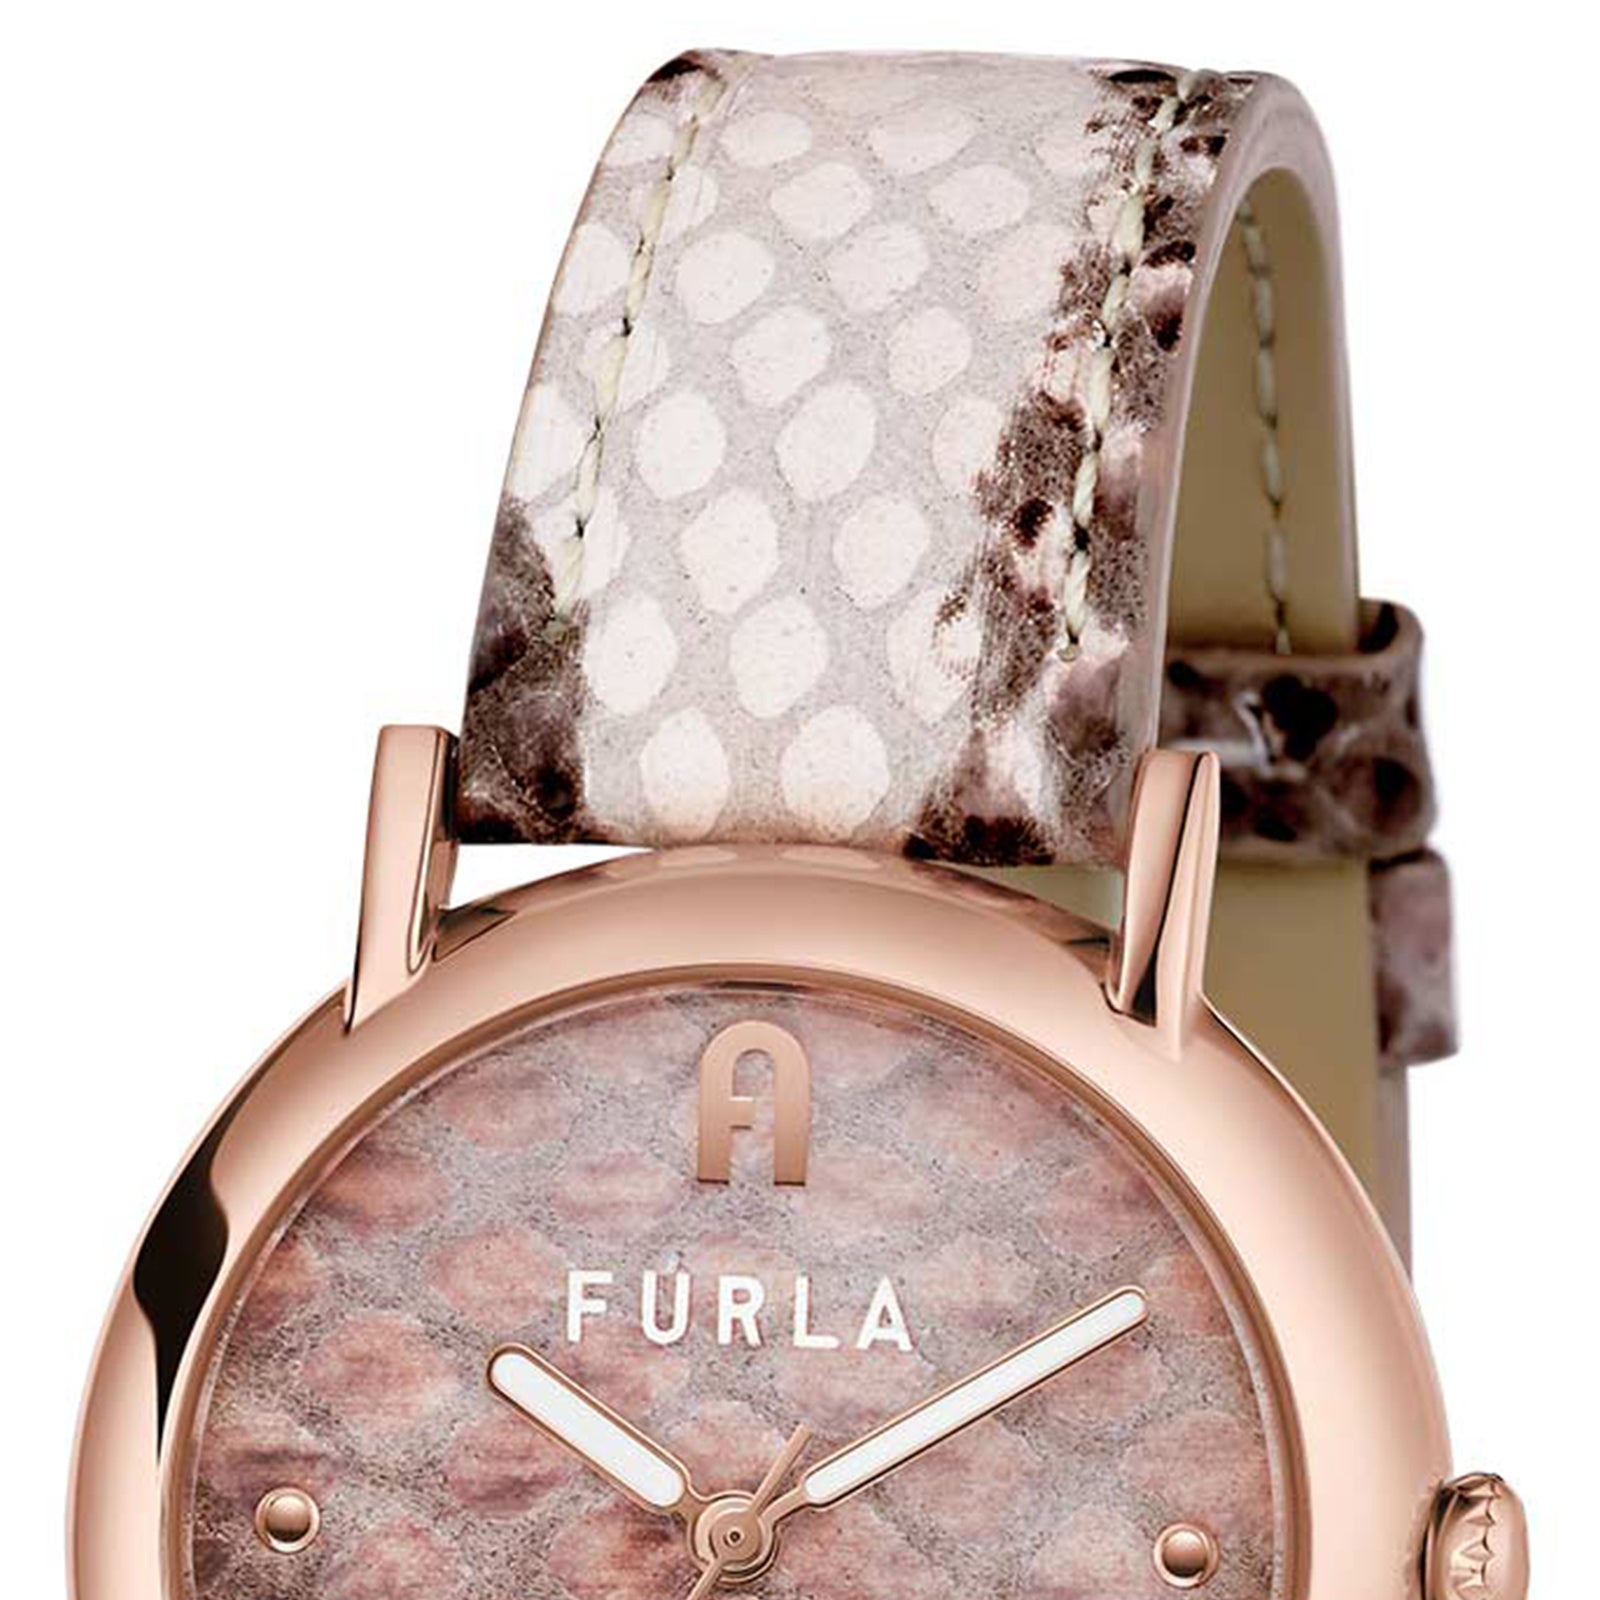 FURLA (フルラ) の新作時計『 FURLA EASY SHAPE PYTHON(フルラ イージーシェイプ パイソン) 』が7月20日(水)に発売！